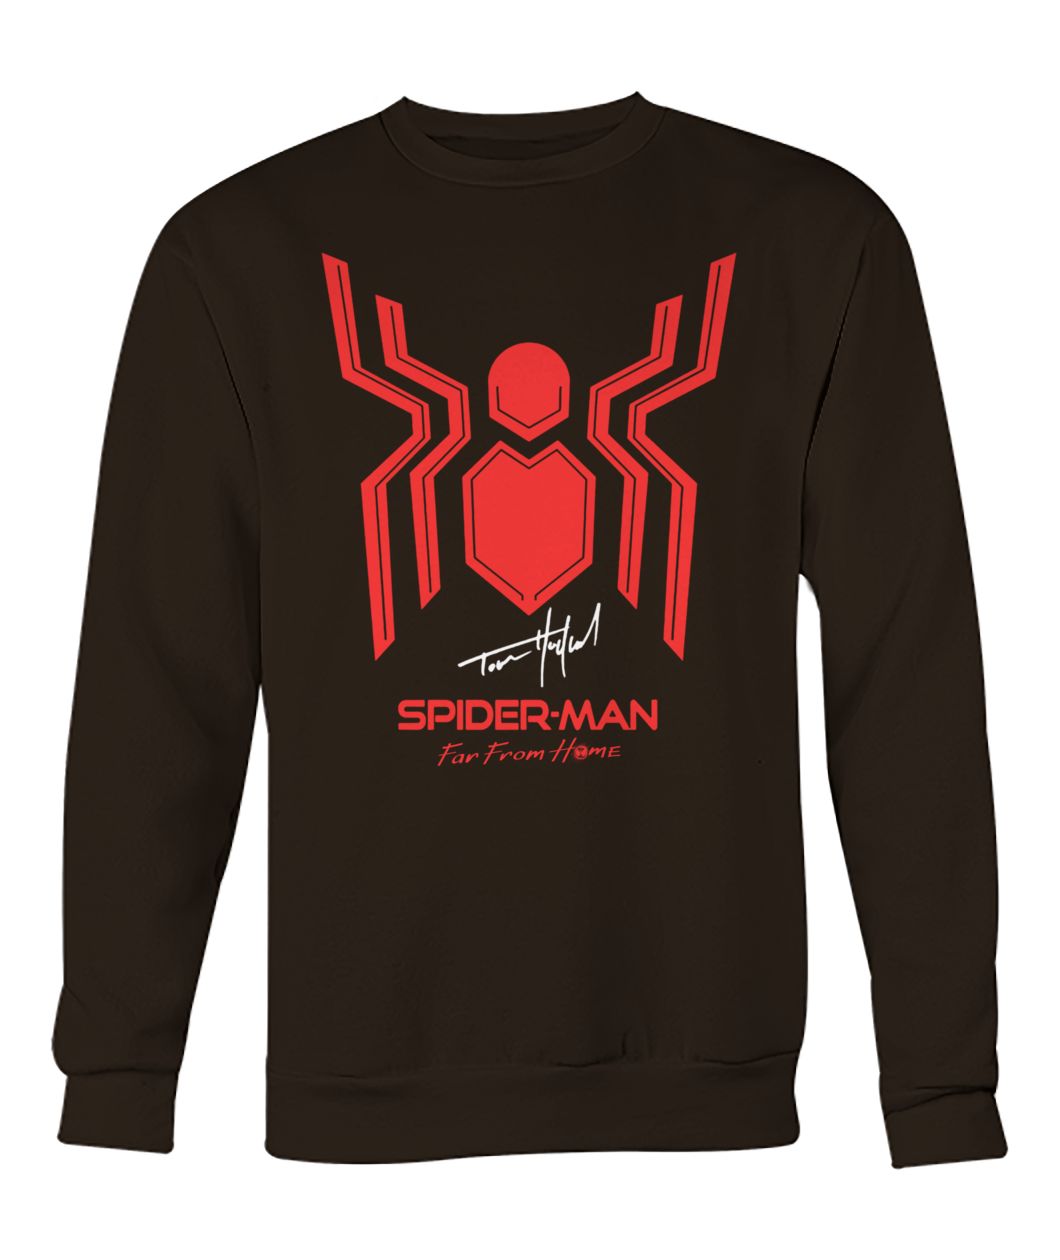 Marvel spider-man far from home crew neck sweatshirt